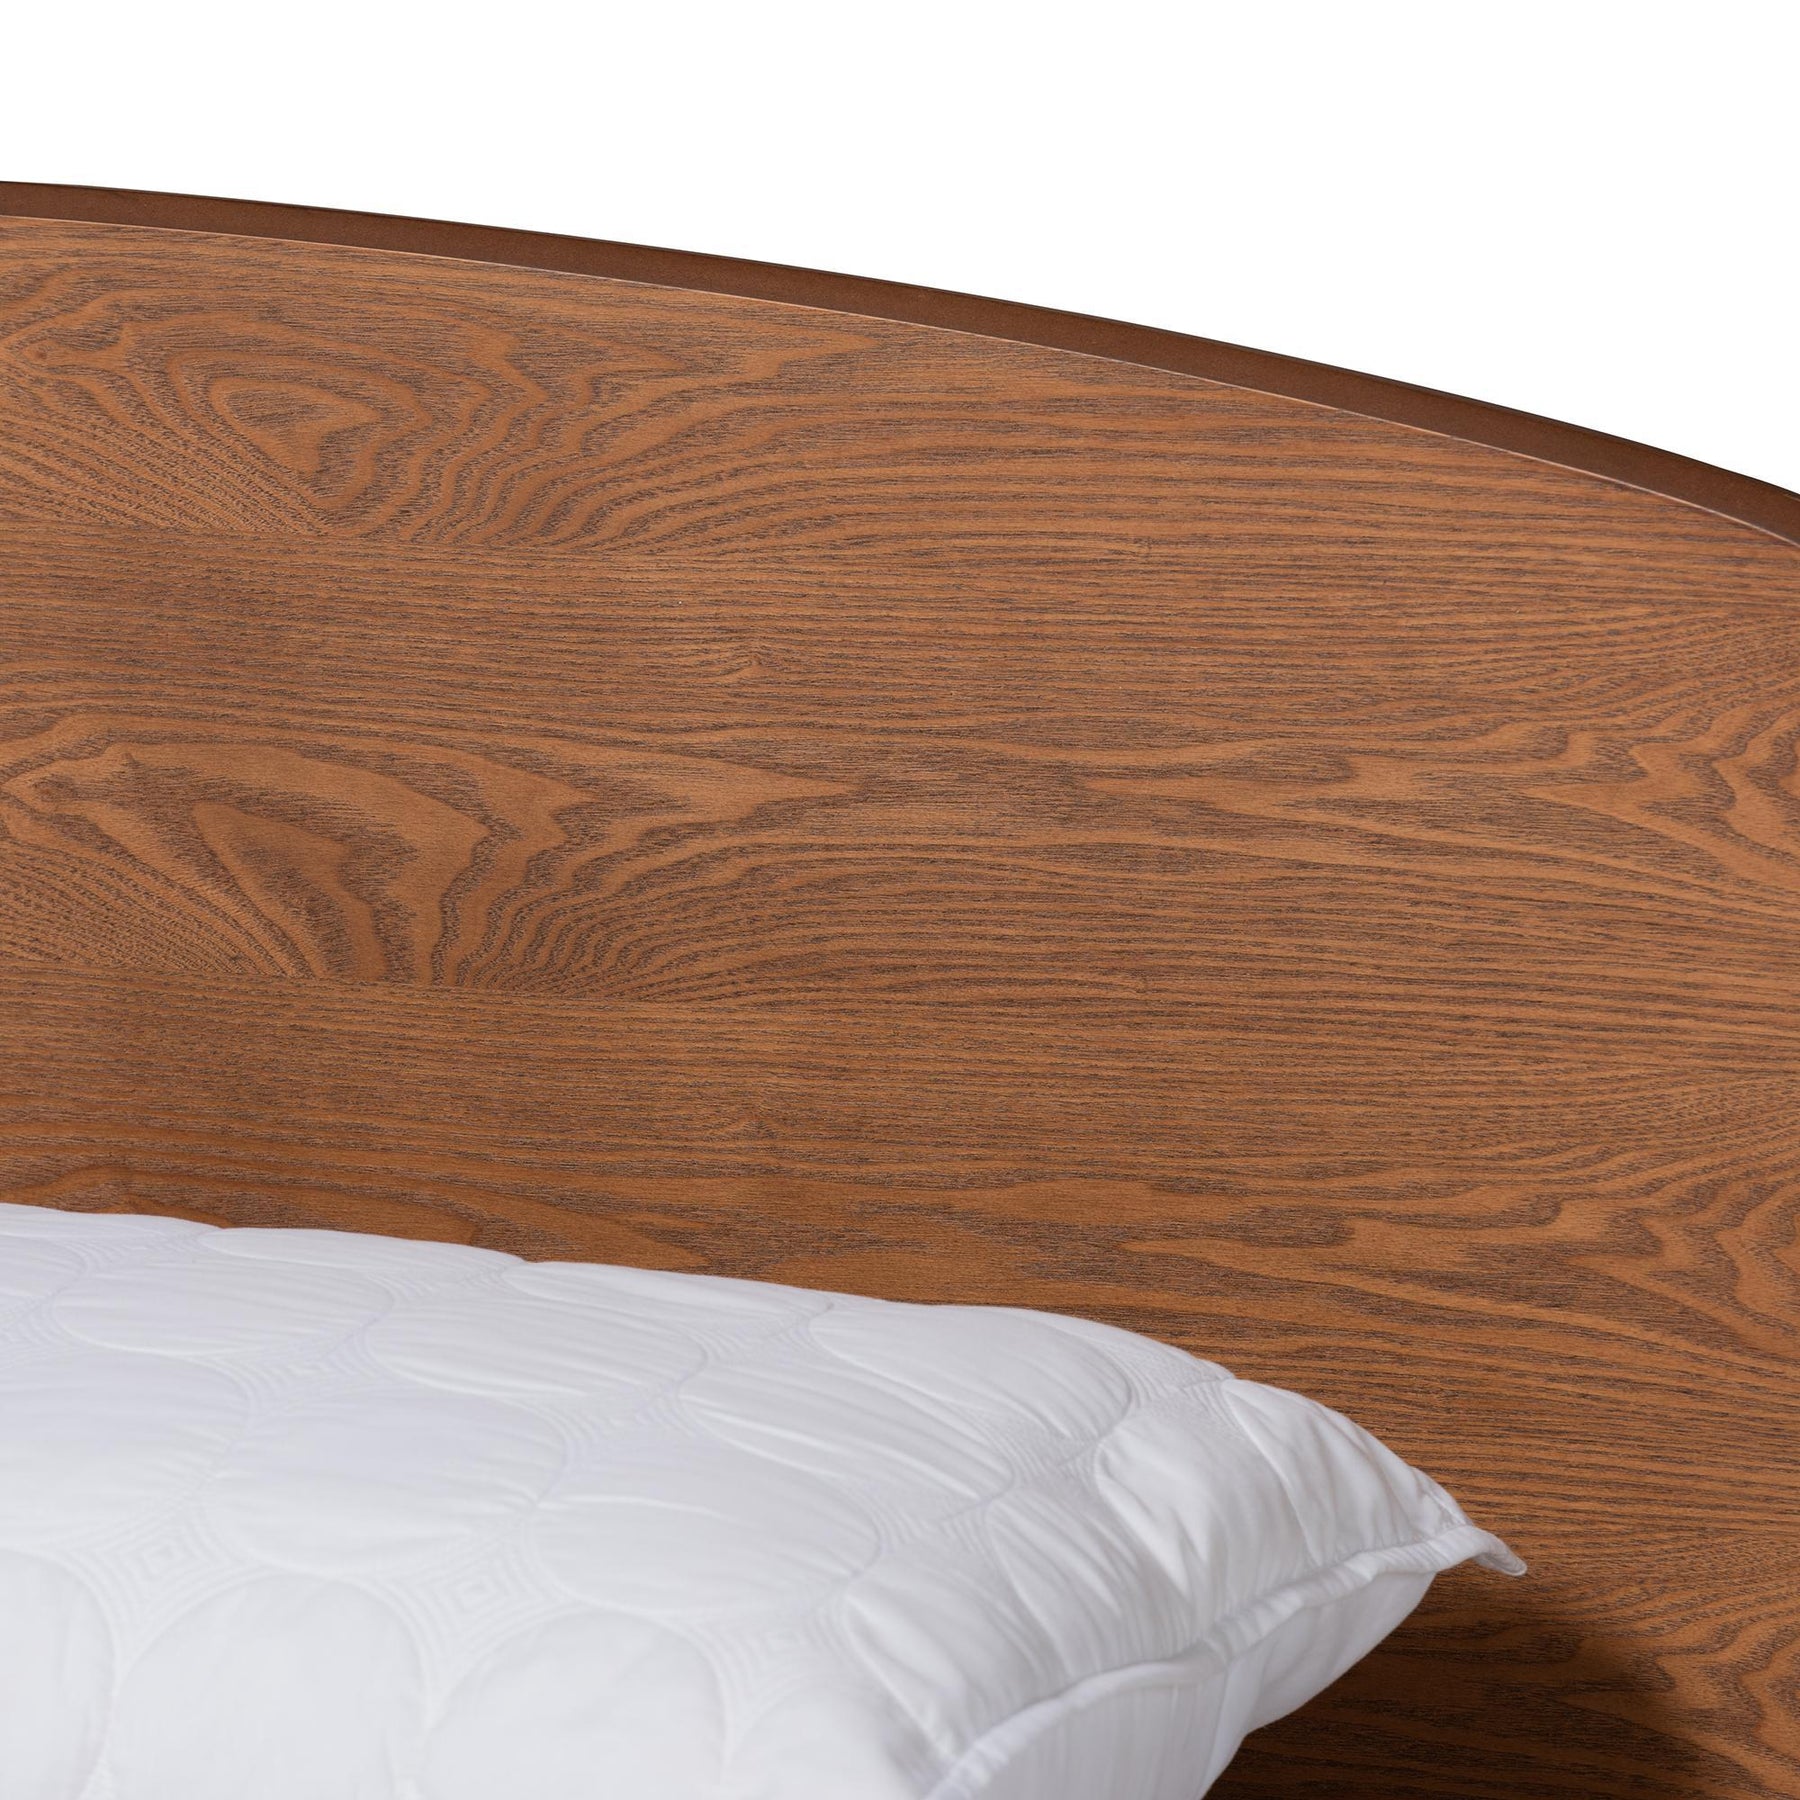 Baxton Studio Keagan Mid-Century Modern Transitional Walnut Brown Finished Wood Queen Size Platform Bed - MG-2200-1-Ash Walnut-Queen